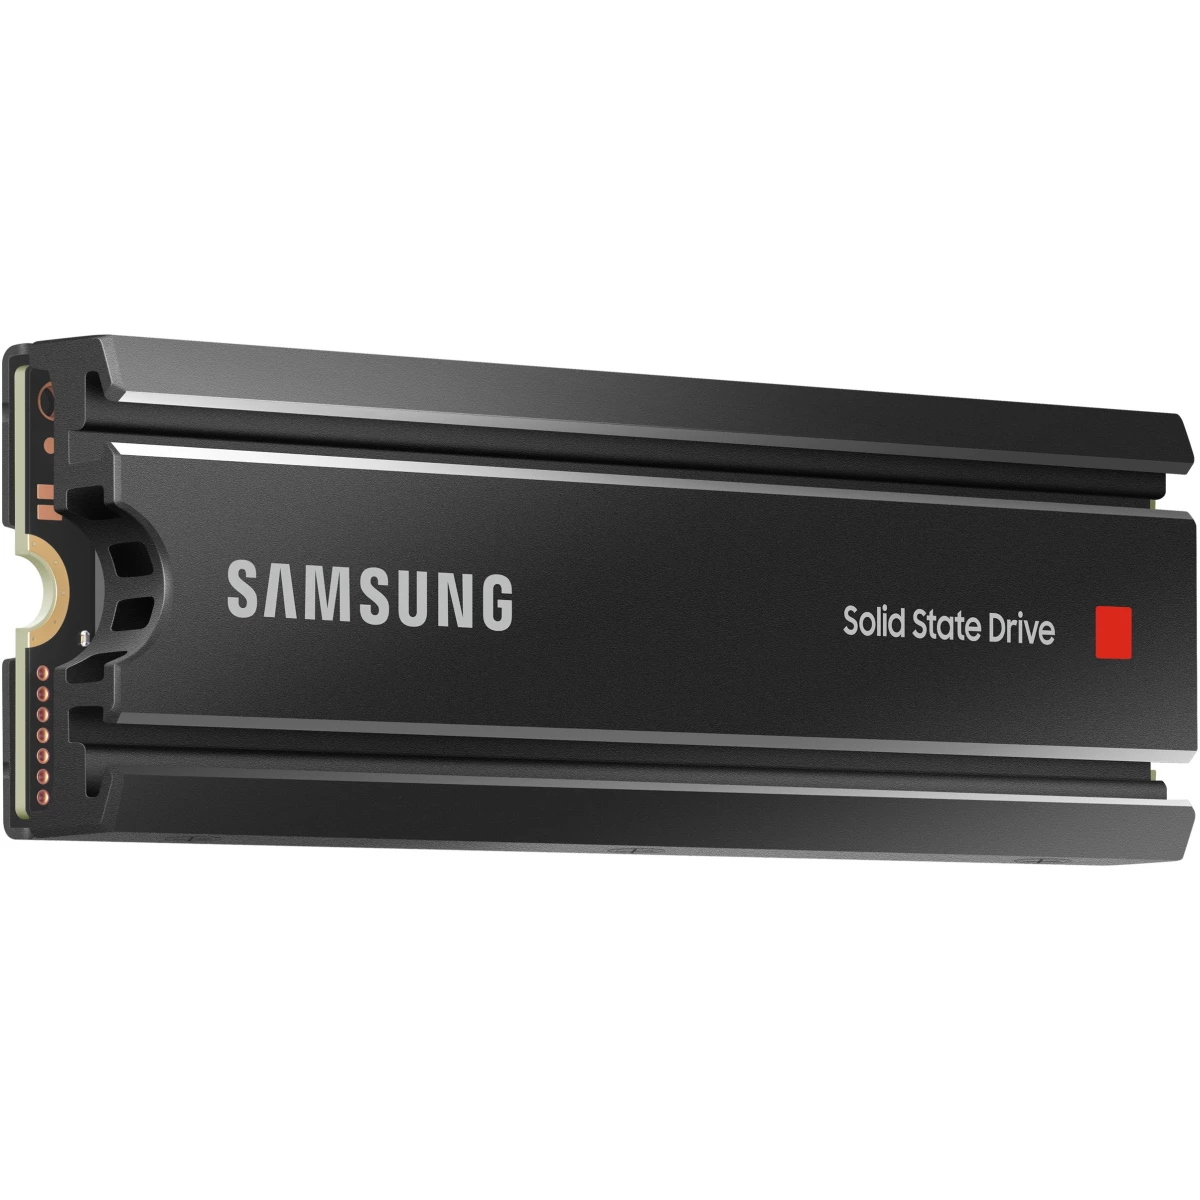 SSD M.2 2TB Samsung 980 PRO Heatsink NVMe PCIe 4.0 x 4 retail